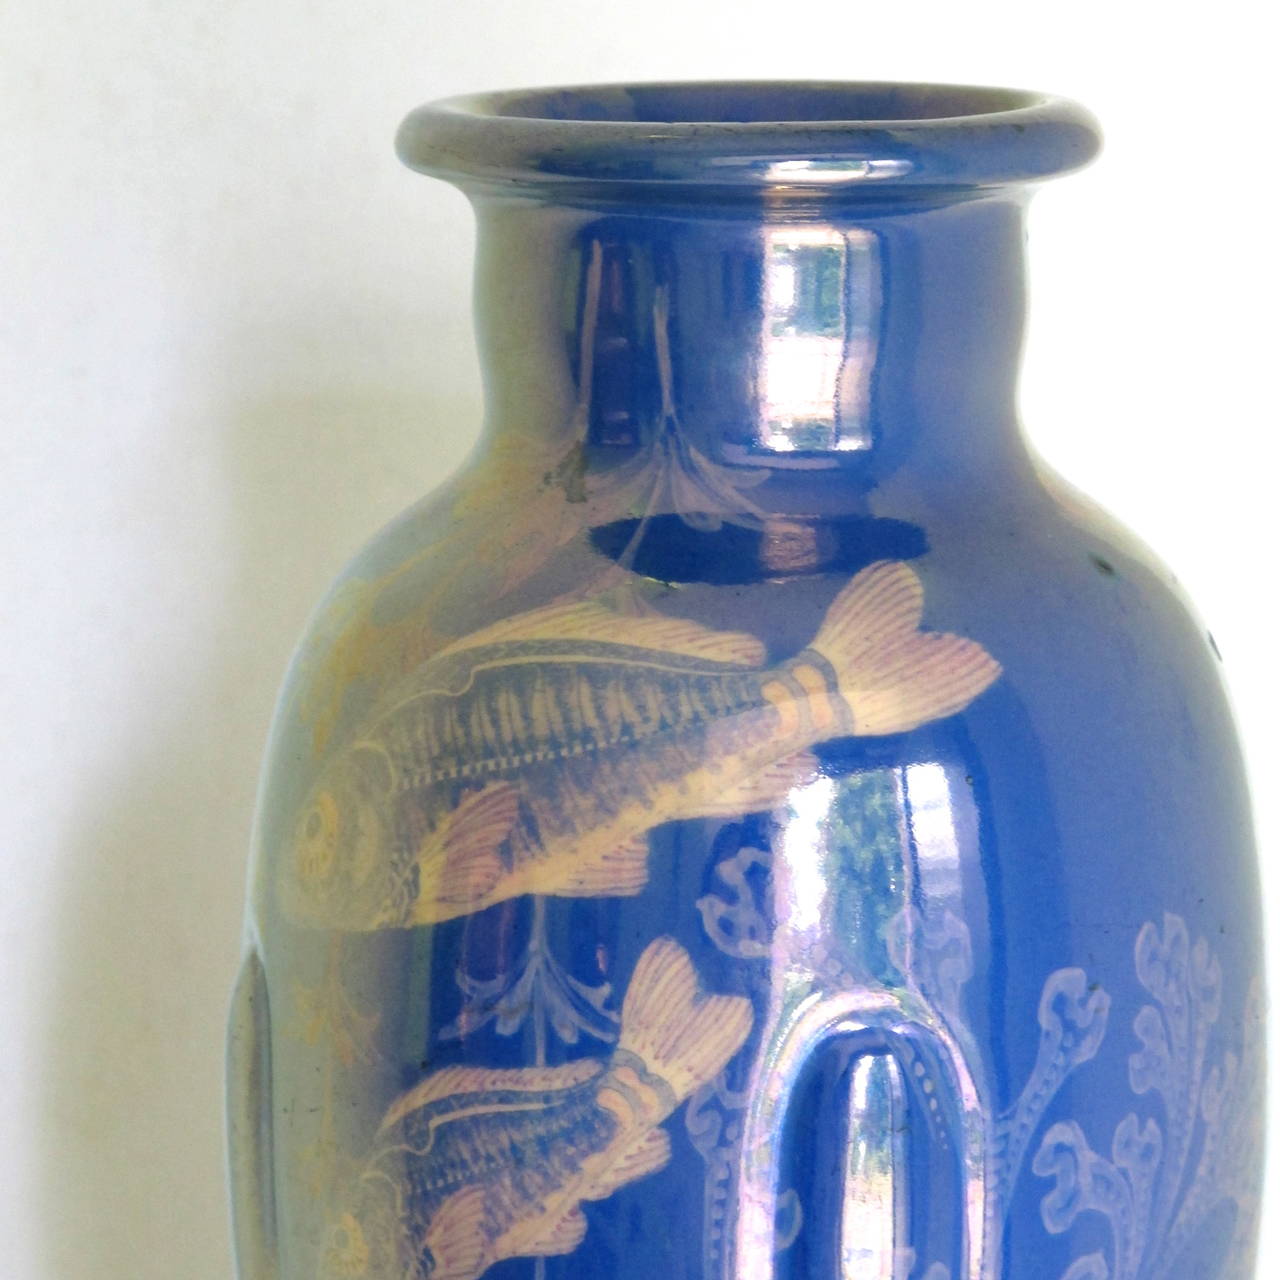 Art Nouveau earthenware vase [model number 149] with hand-painted underwater scene below gold luster glaze. Signed on the bottom; "St. Lukas Utrecht," "149" (model number), "F.M." (probably F. Müller).

St. Lukas